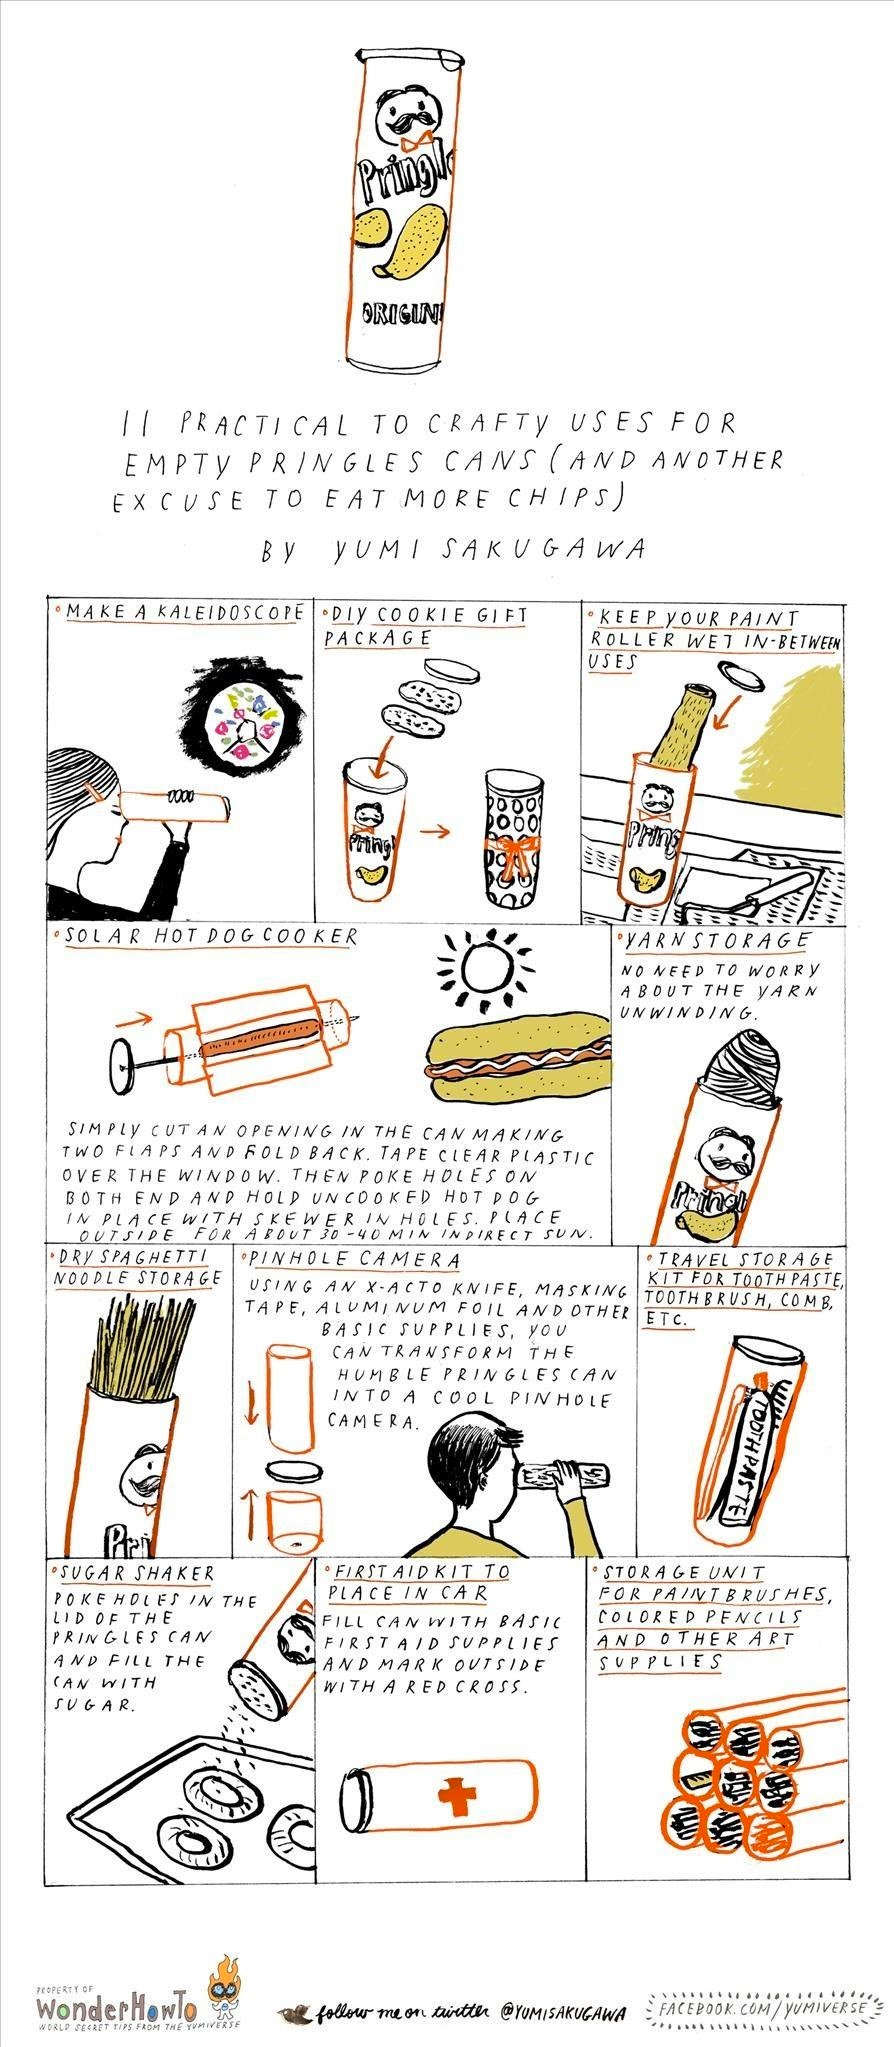 Creative Ways to Repurpose Pringles tube cans | ecogreenlove